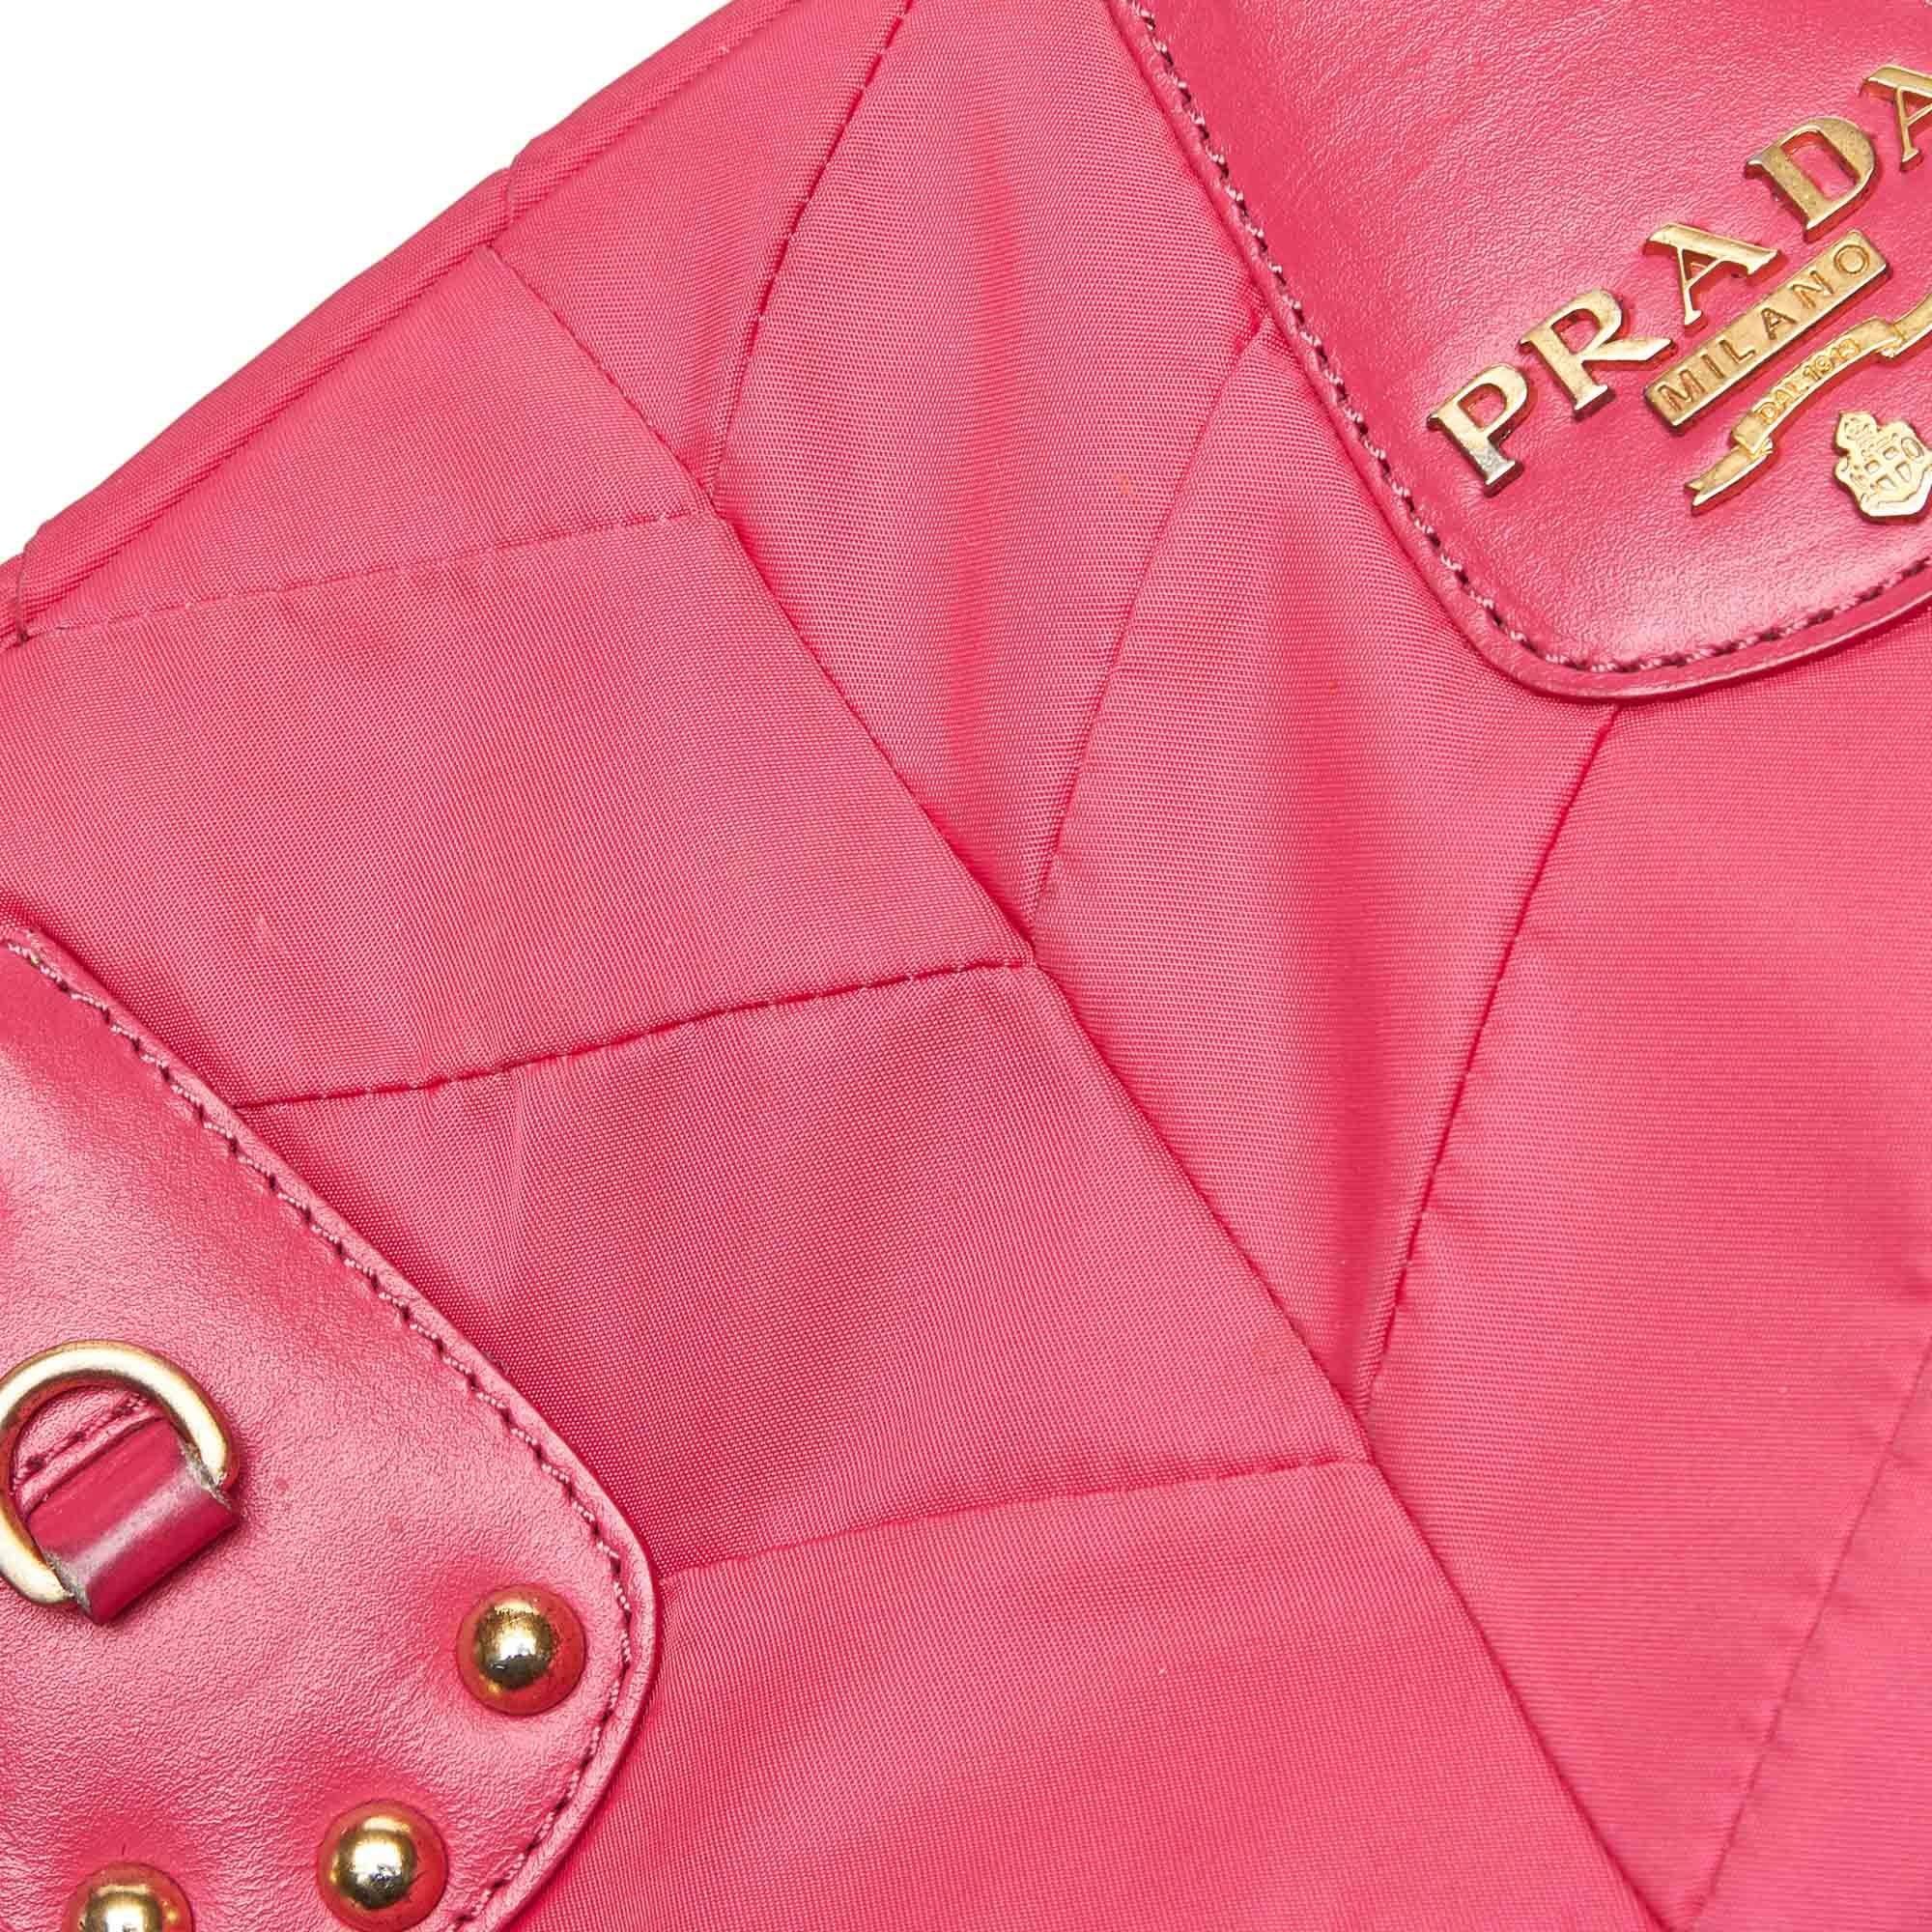 Prada Pink Nylon Fabric Quilted Handbag Italy 6